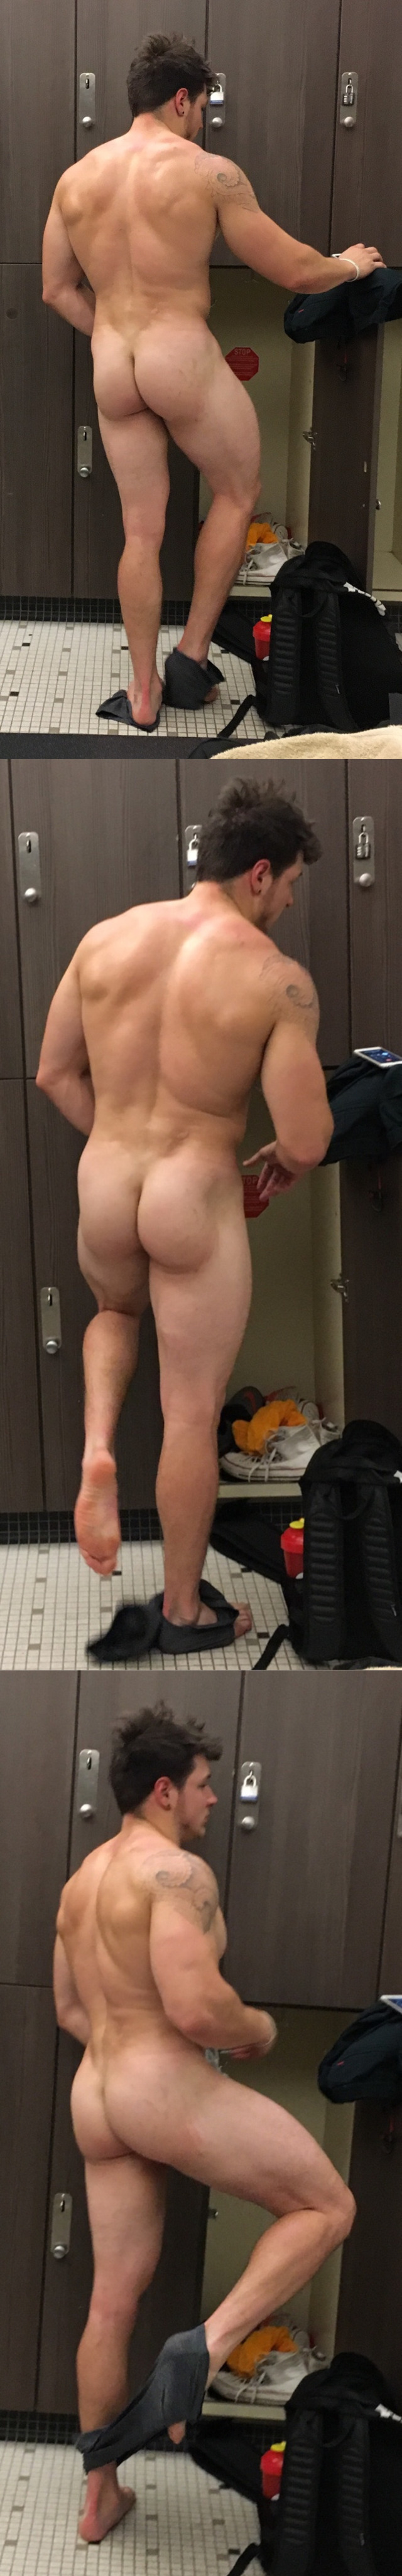 lockerroom-beed-caught-naked-ass-spycam